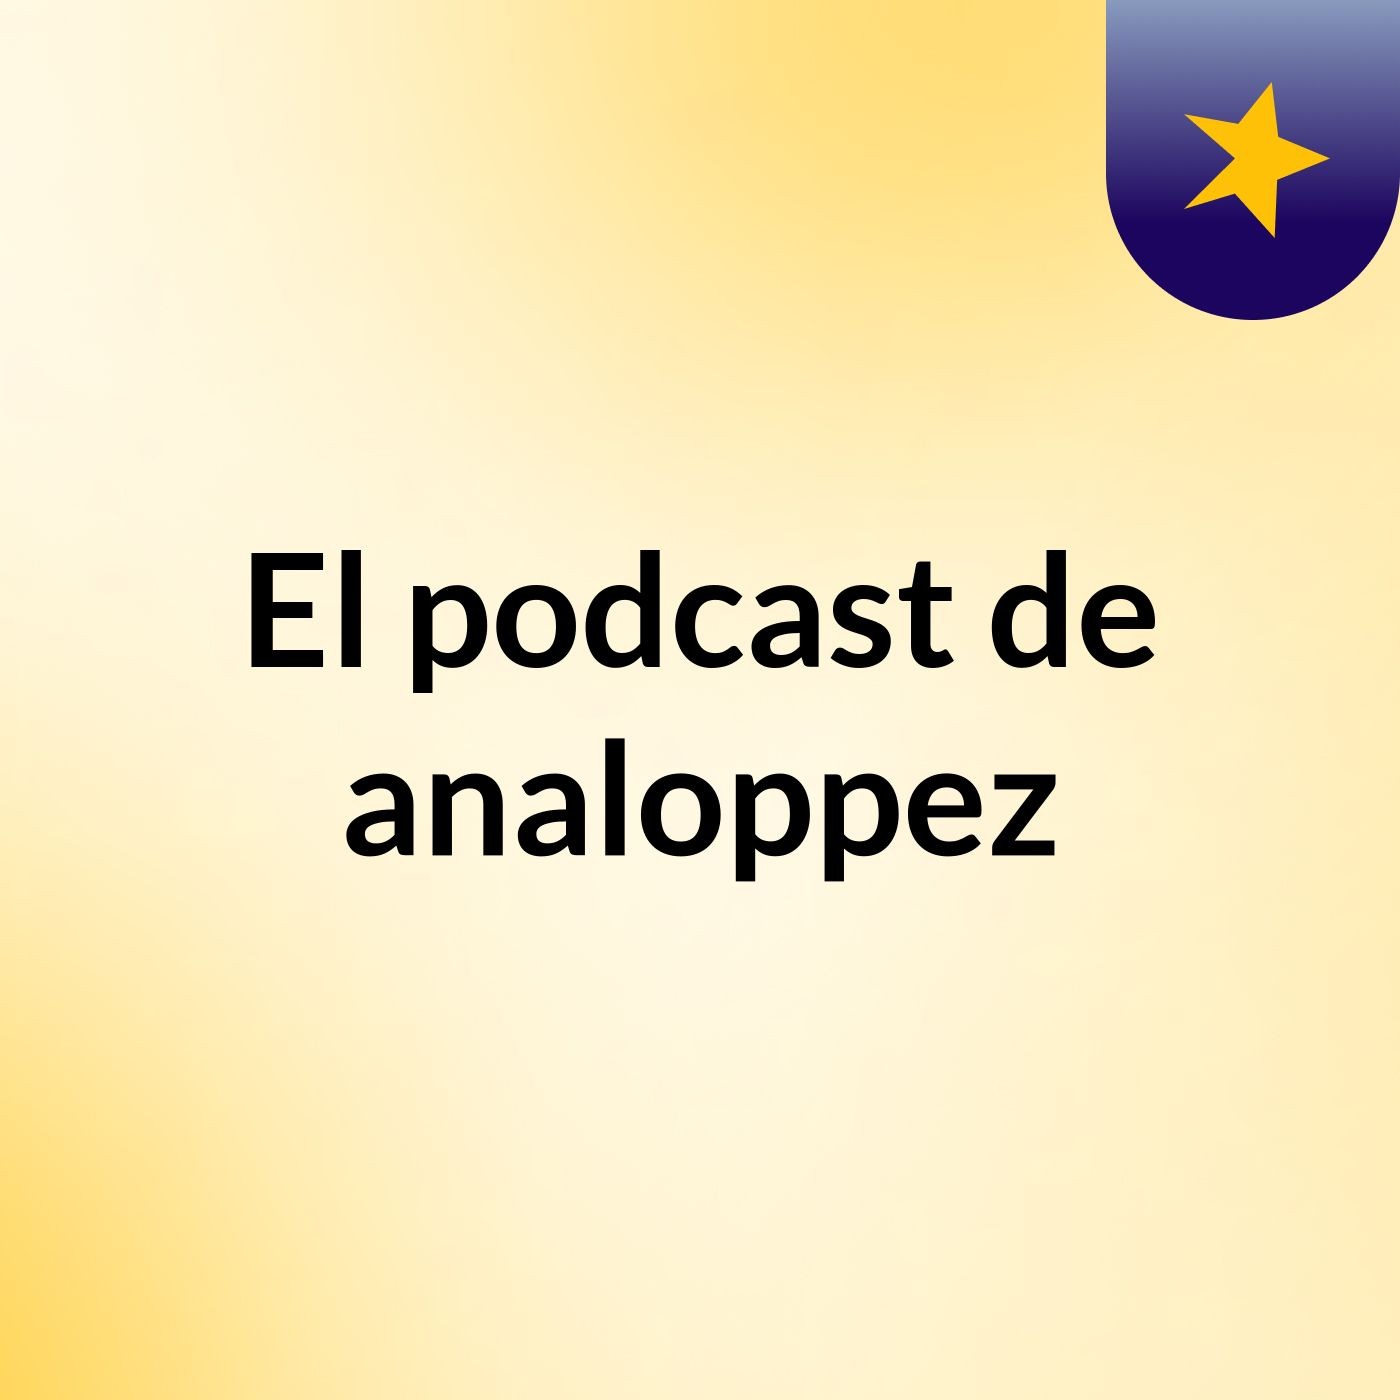 El podcast de analoppez